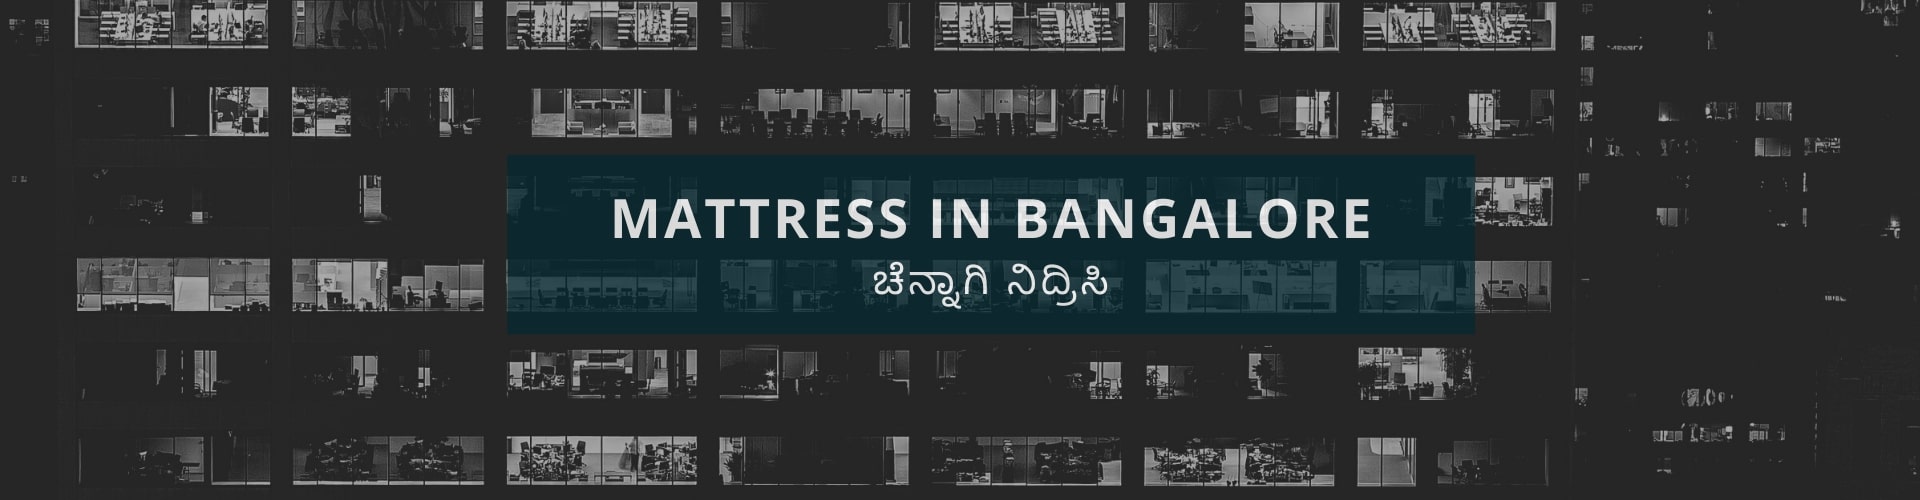 Buy mattresses online in bangalore